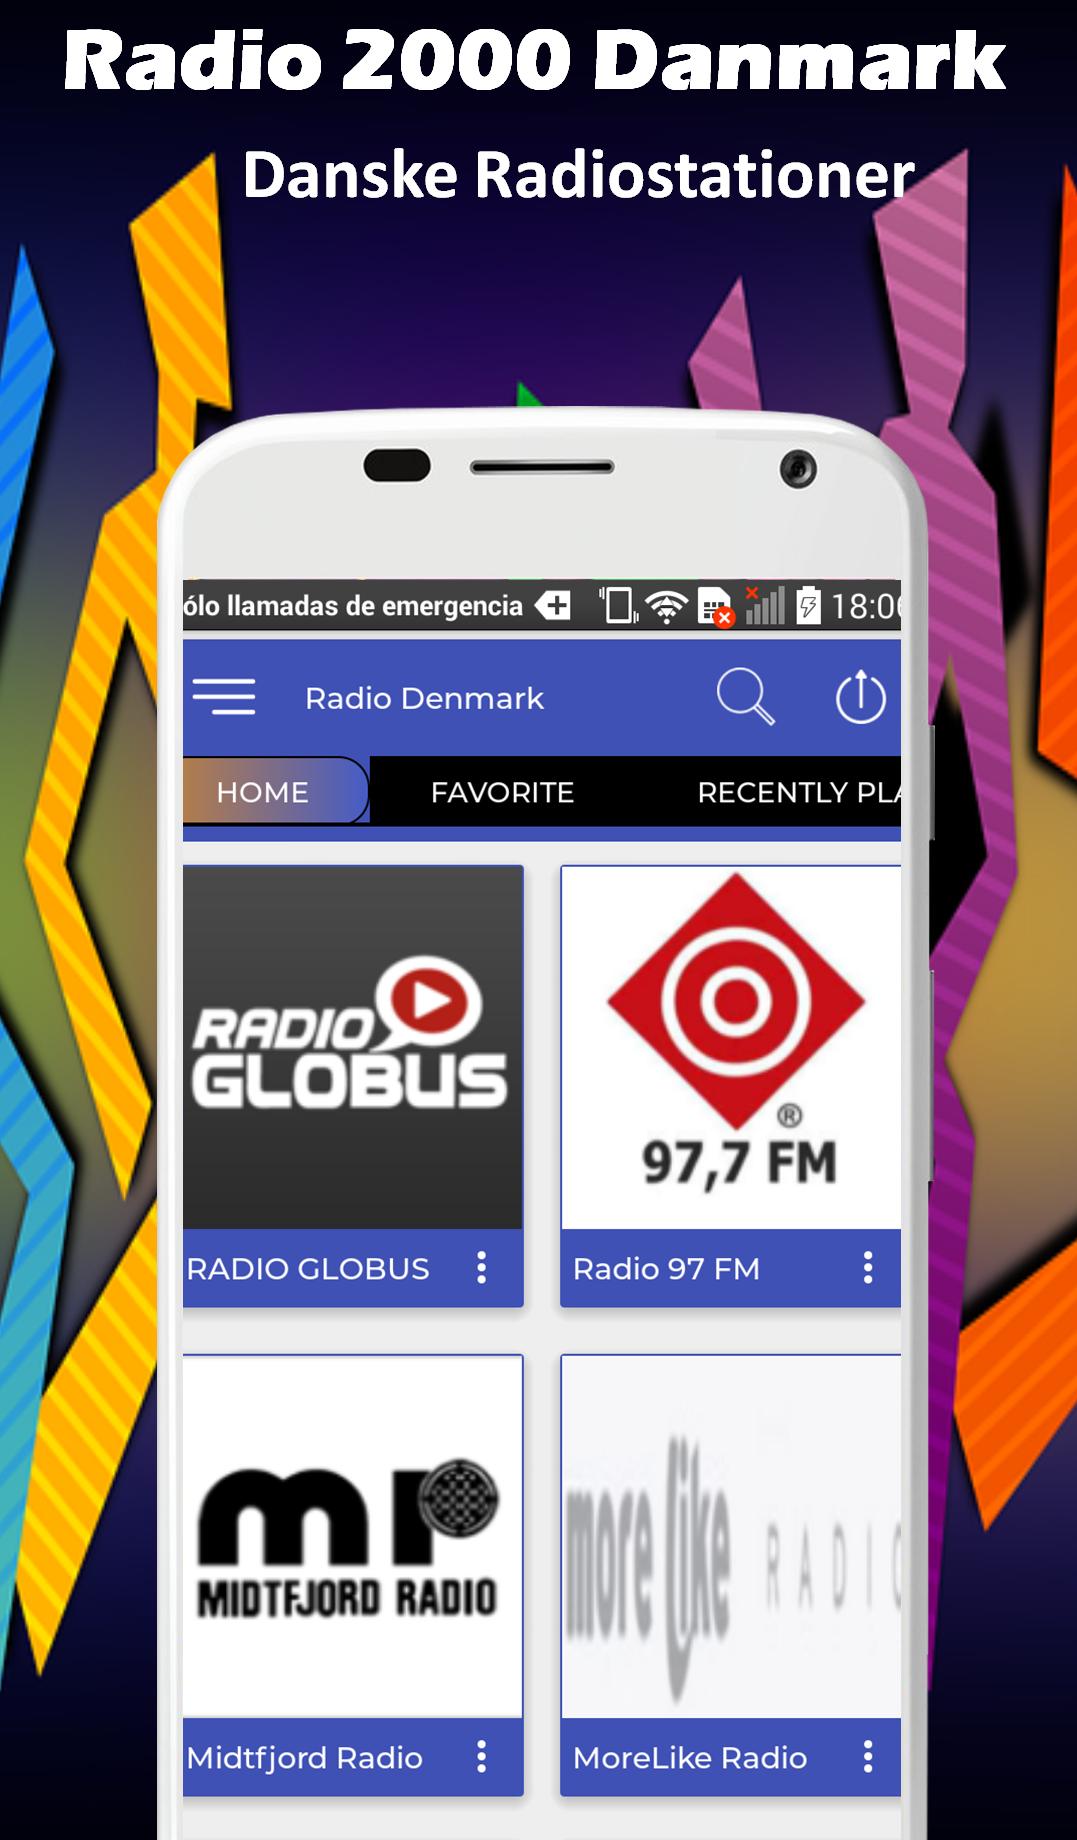 Radio 2000 Danmark Radio App Free Online for Android - APK Download